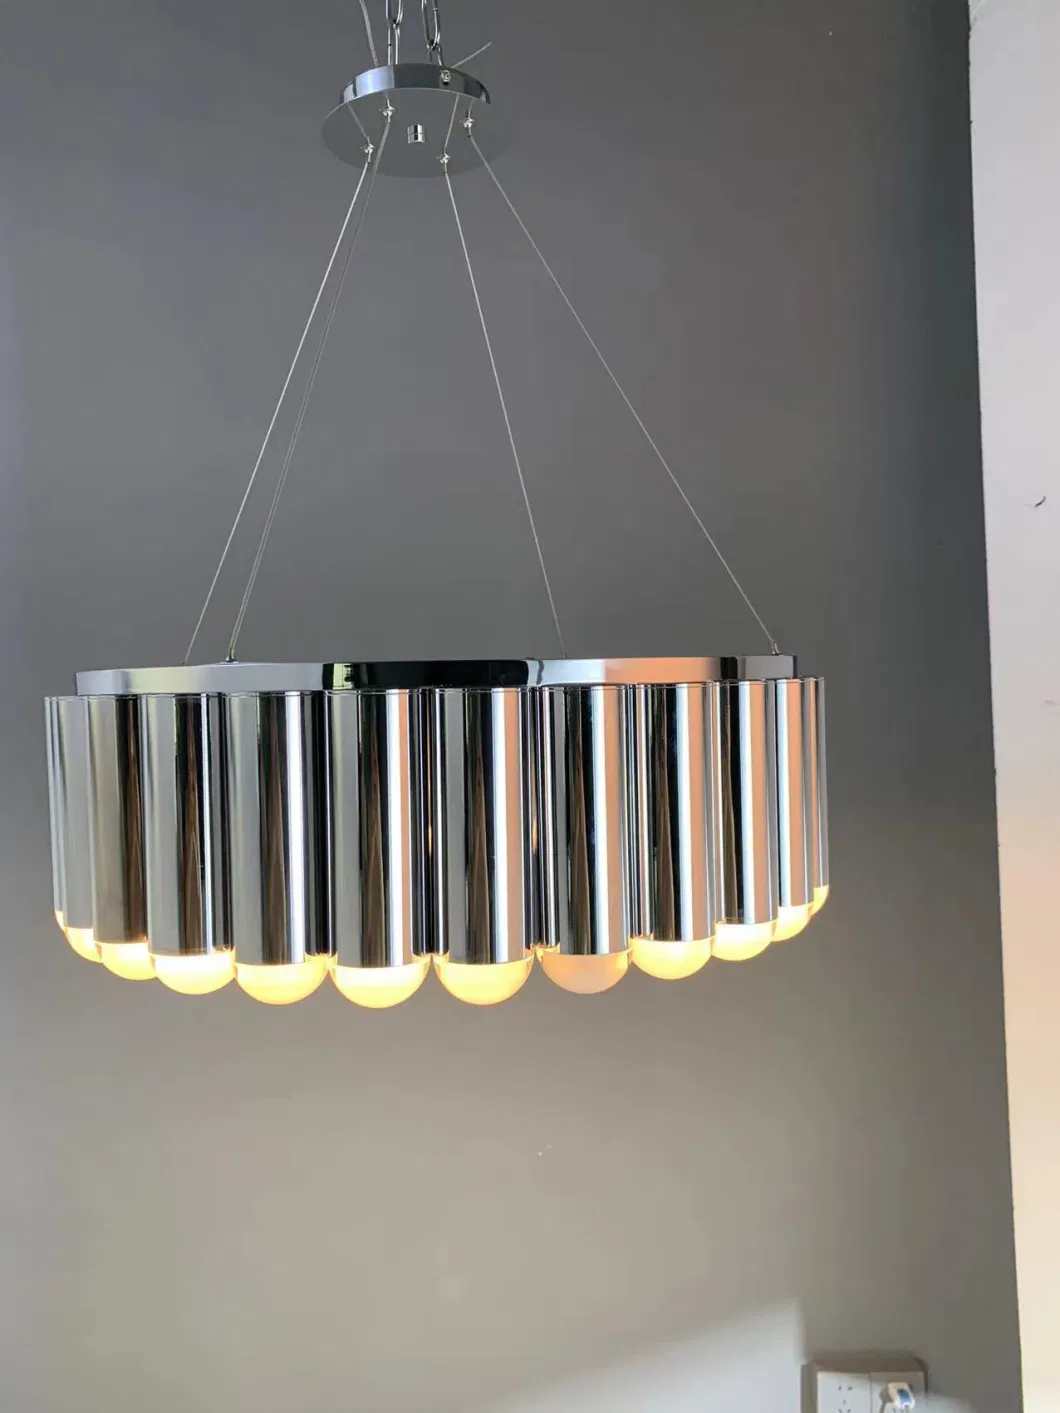 Lee Broom Carousel Aluminium Pipe Round Acrylic Shade Indoor Lighting Pendant Lamp